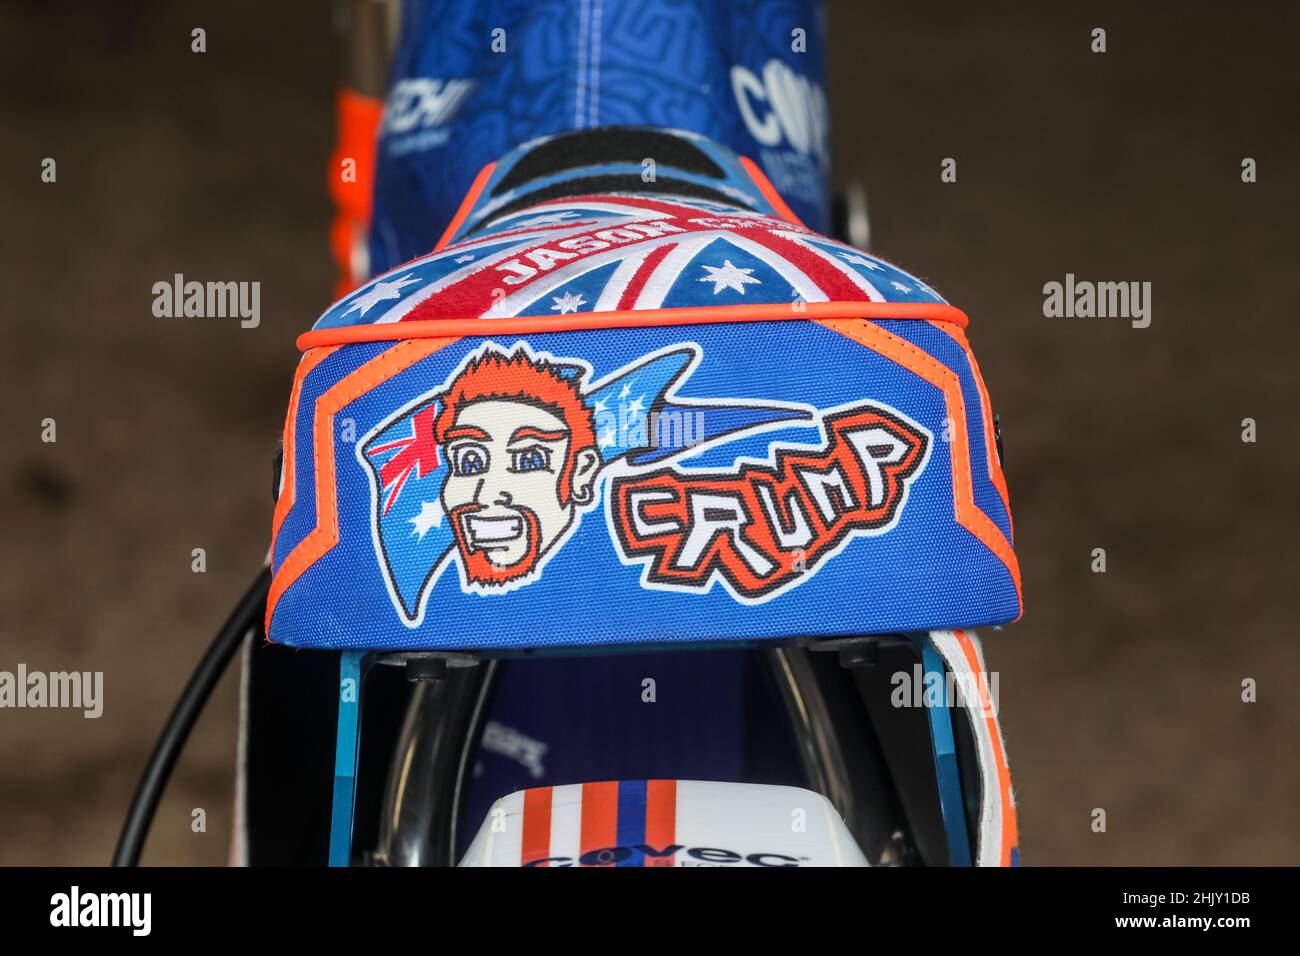 Sella per bici jason Crump's speedway con logo. Ipswich Witches Speedway, giornata stampa. 14 maggio 2021. Foto Stock